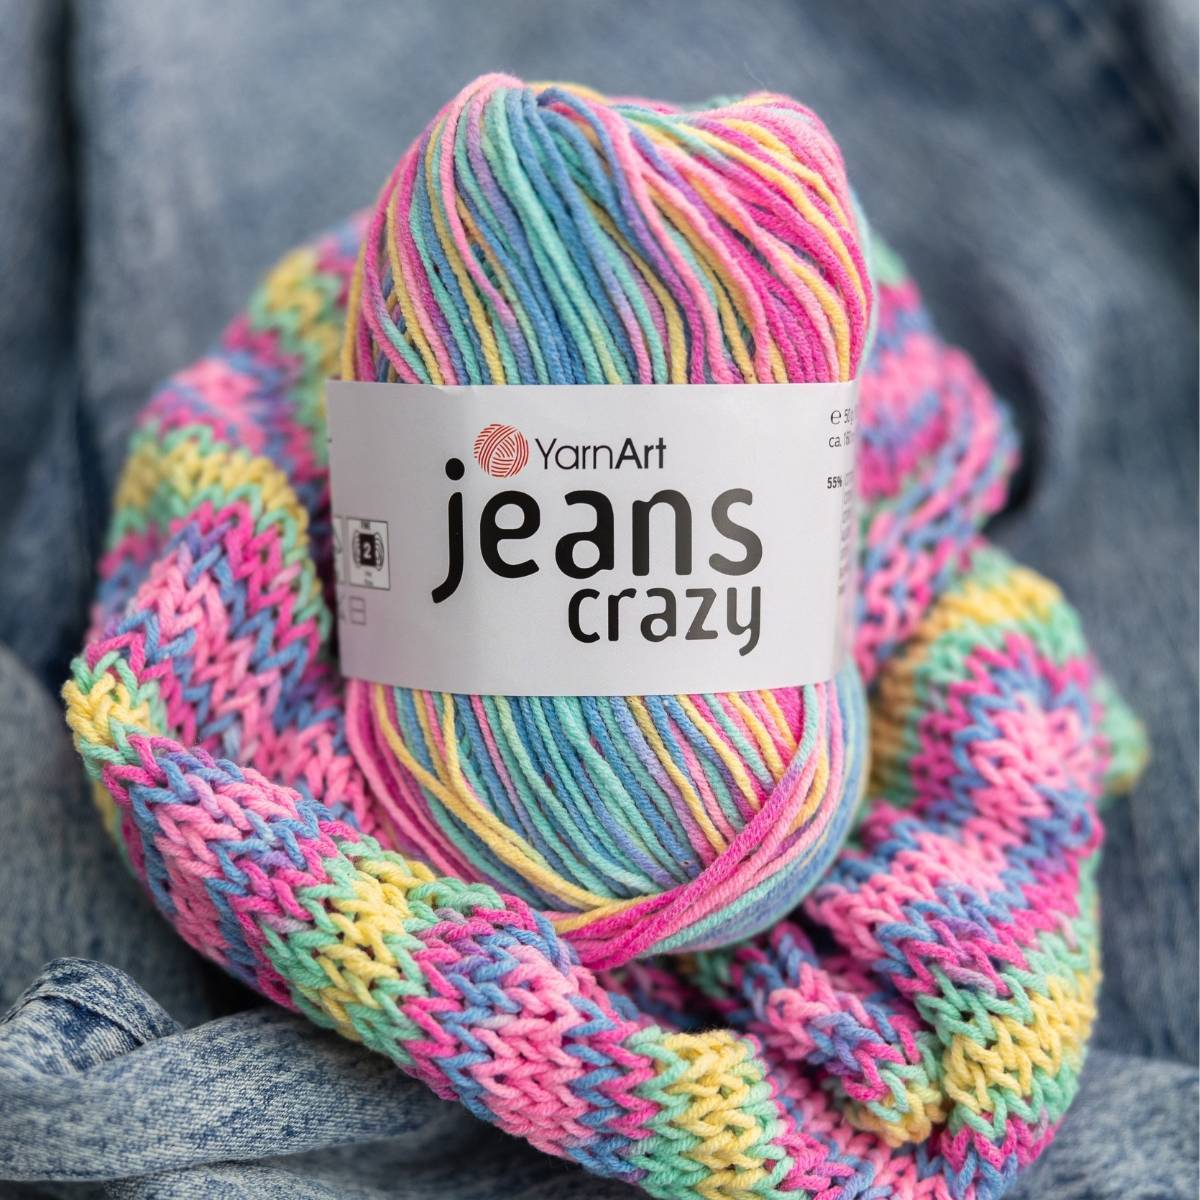 Yarn Art Jeans Crazy 7204 ✔️ Mila Druciarnia